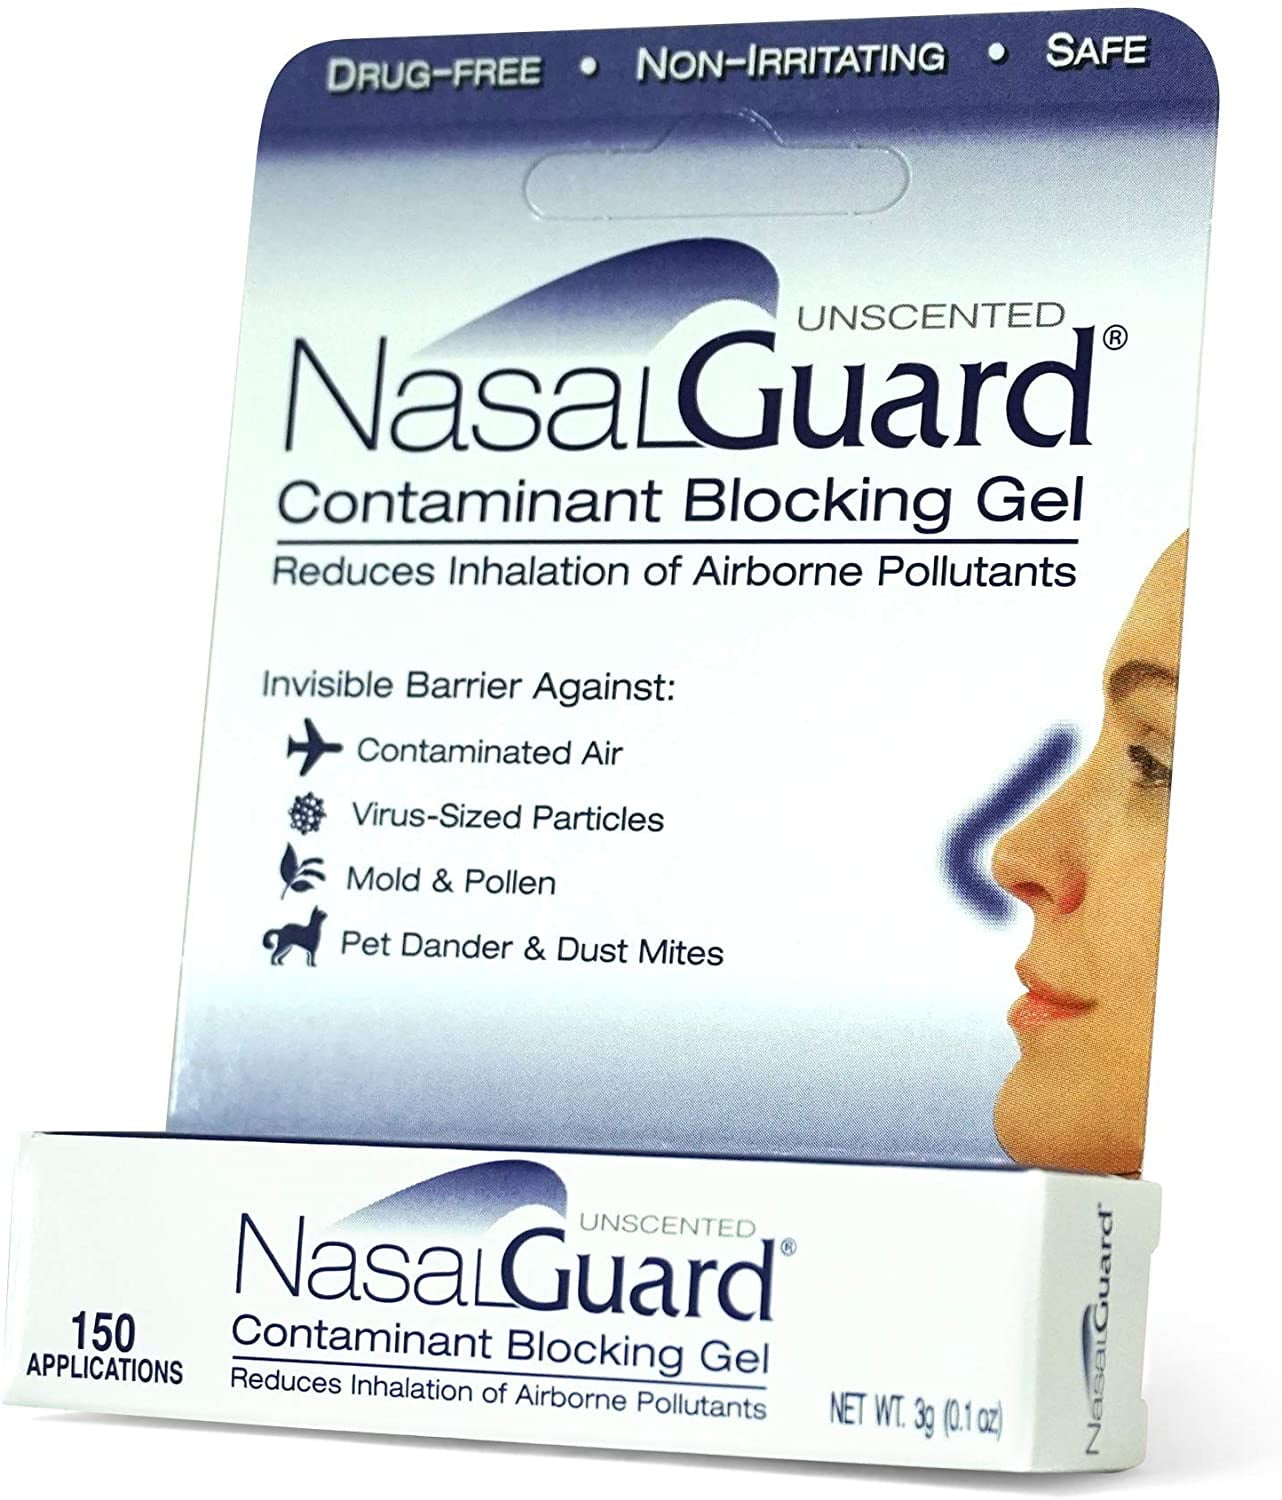 Nasalguard Allergy Relief And Allergen Blocker Nasal Gel Drug Free And Proven Safe For Pollen 